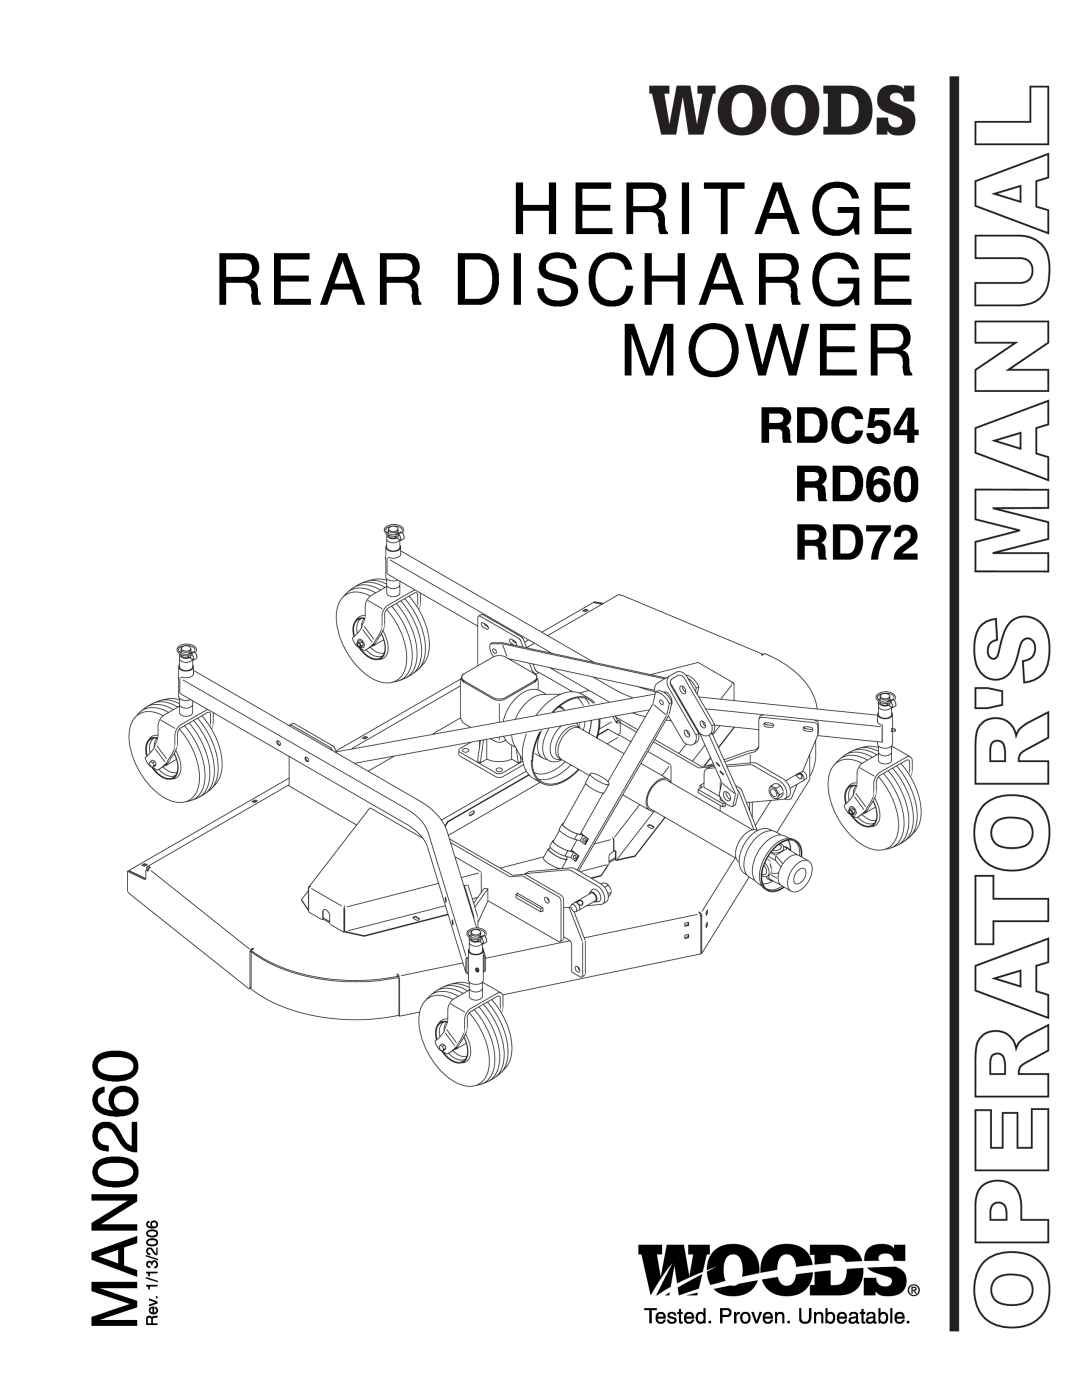 Woods Equipment RDC54, RD60, RD72 manual Heritage Rear Discharge Mower, RDC54 RD60 RD72, MAN0260, Operators Manual 